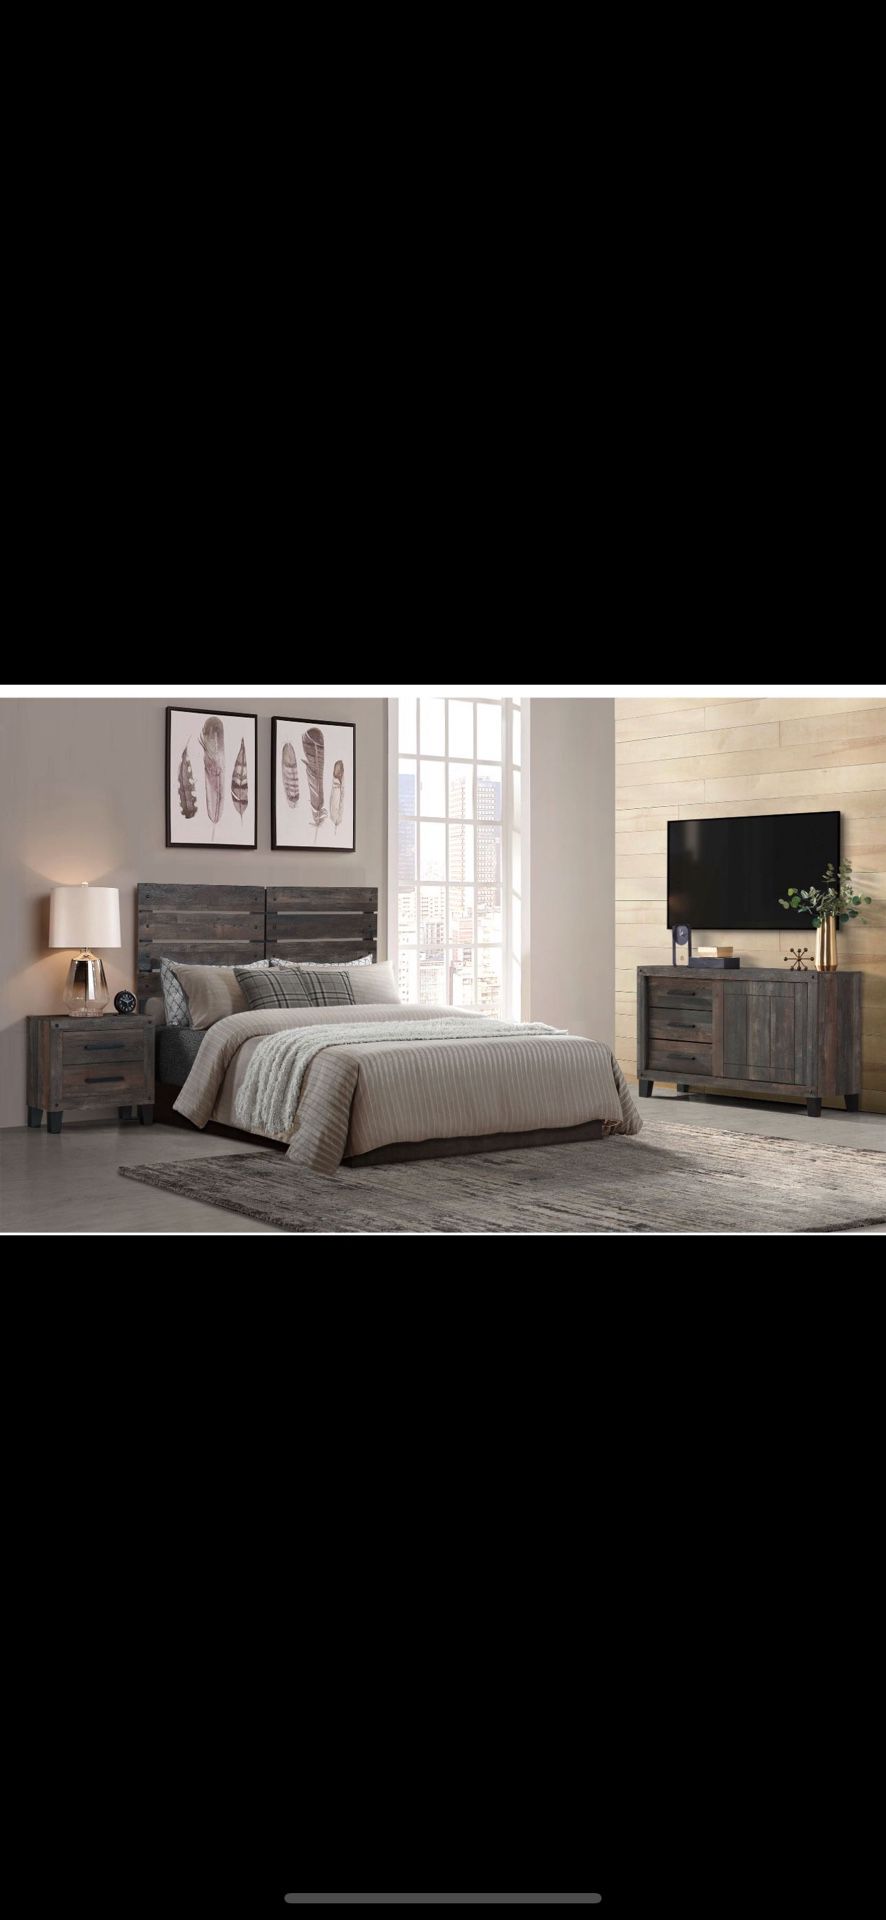 Brand New Complete Bedroom Set For $399